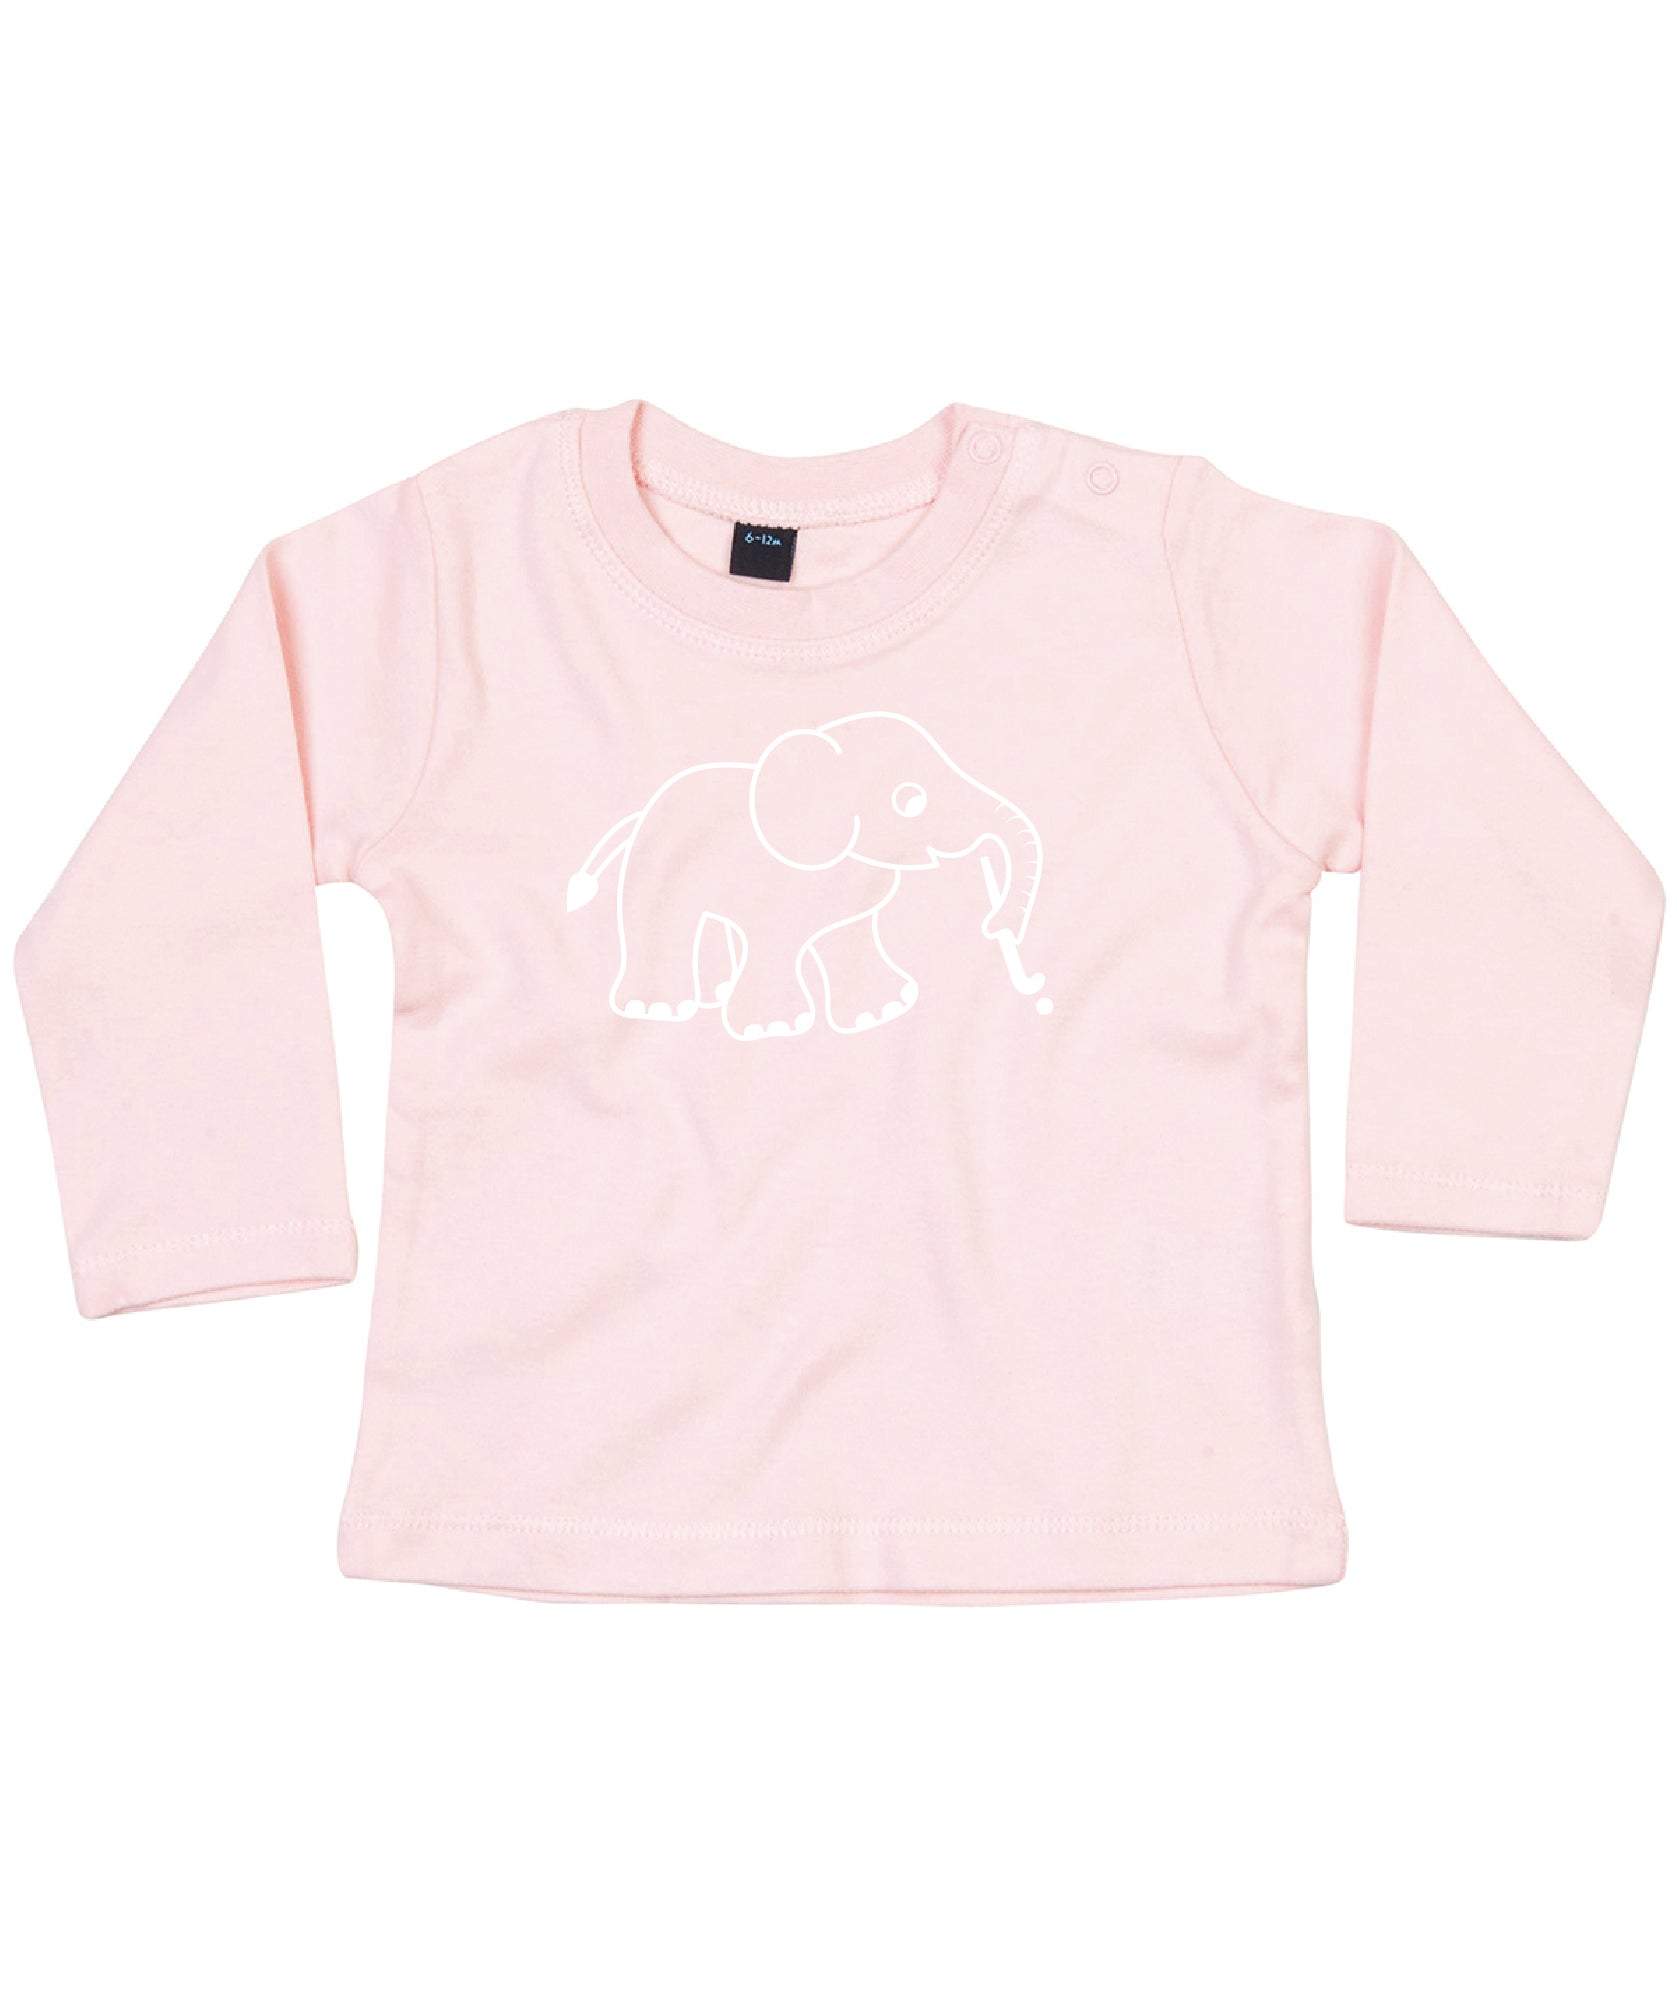 Baby Longsleeve Shirt Hockey Elephant